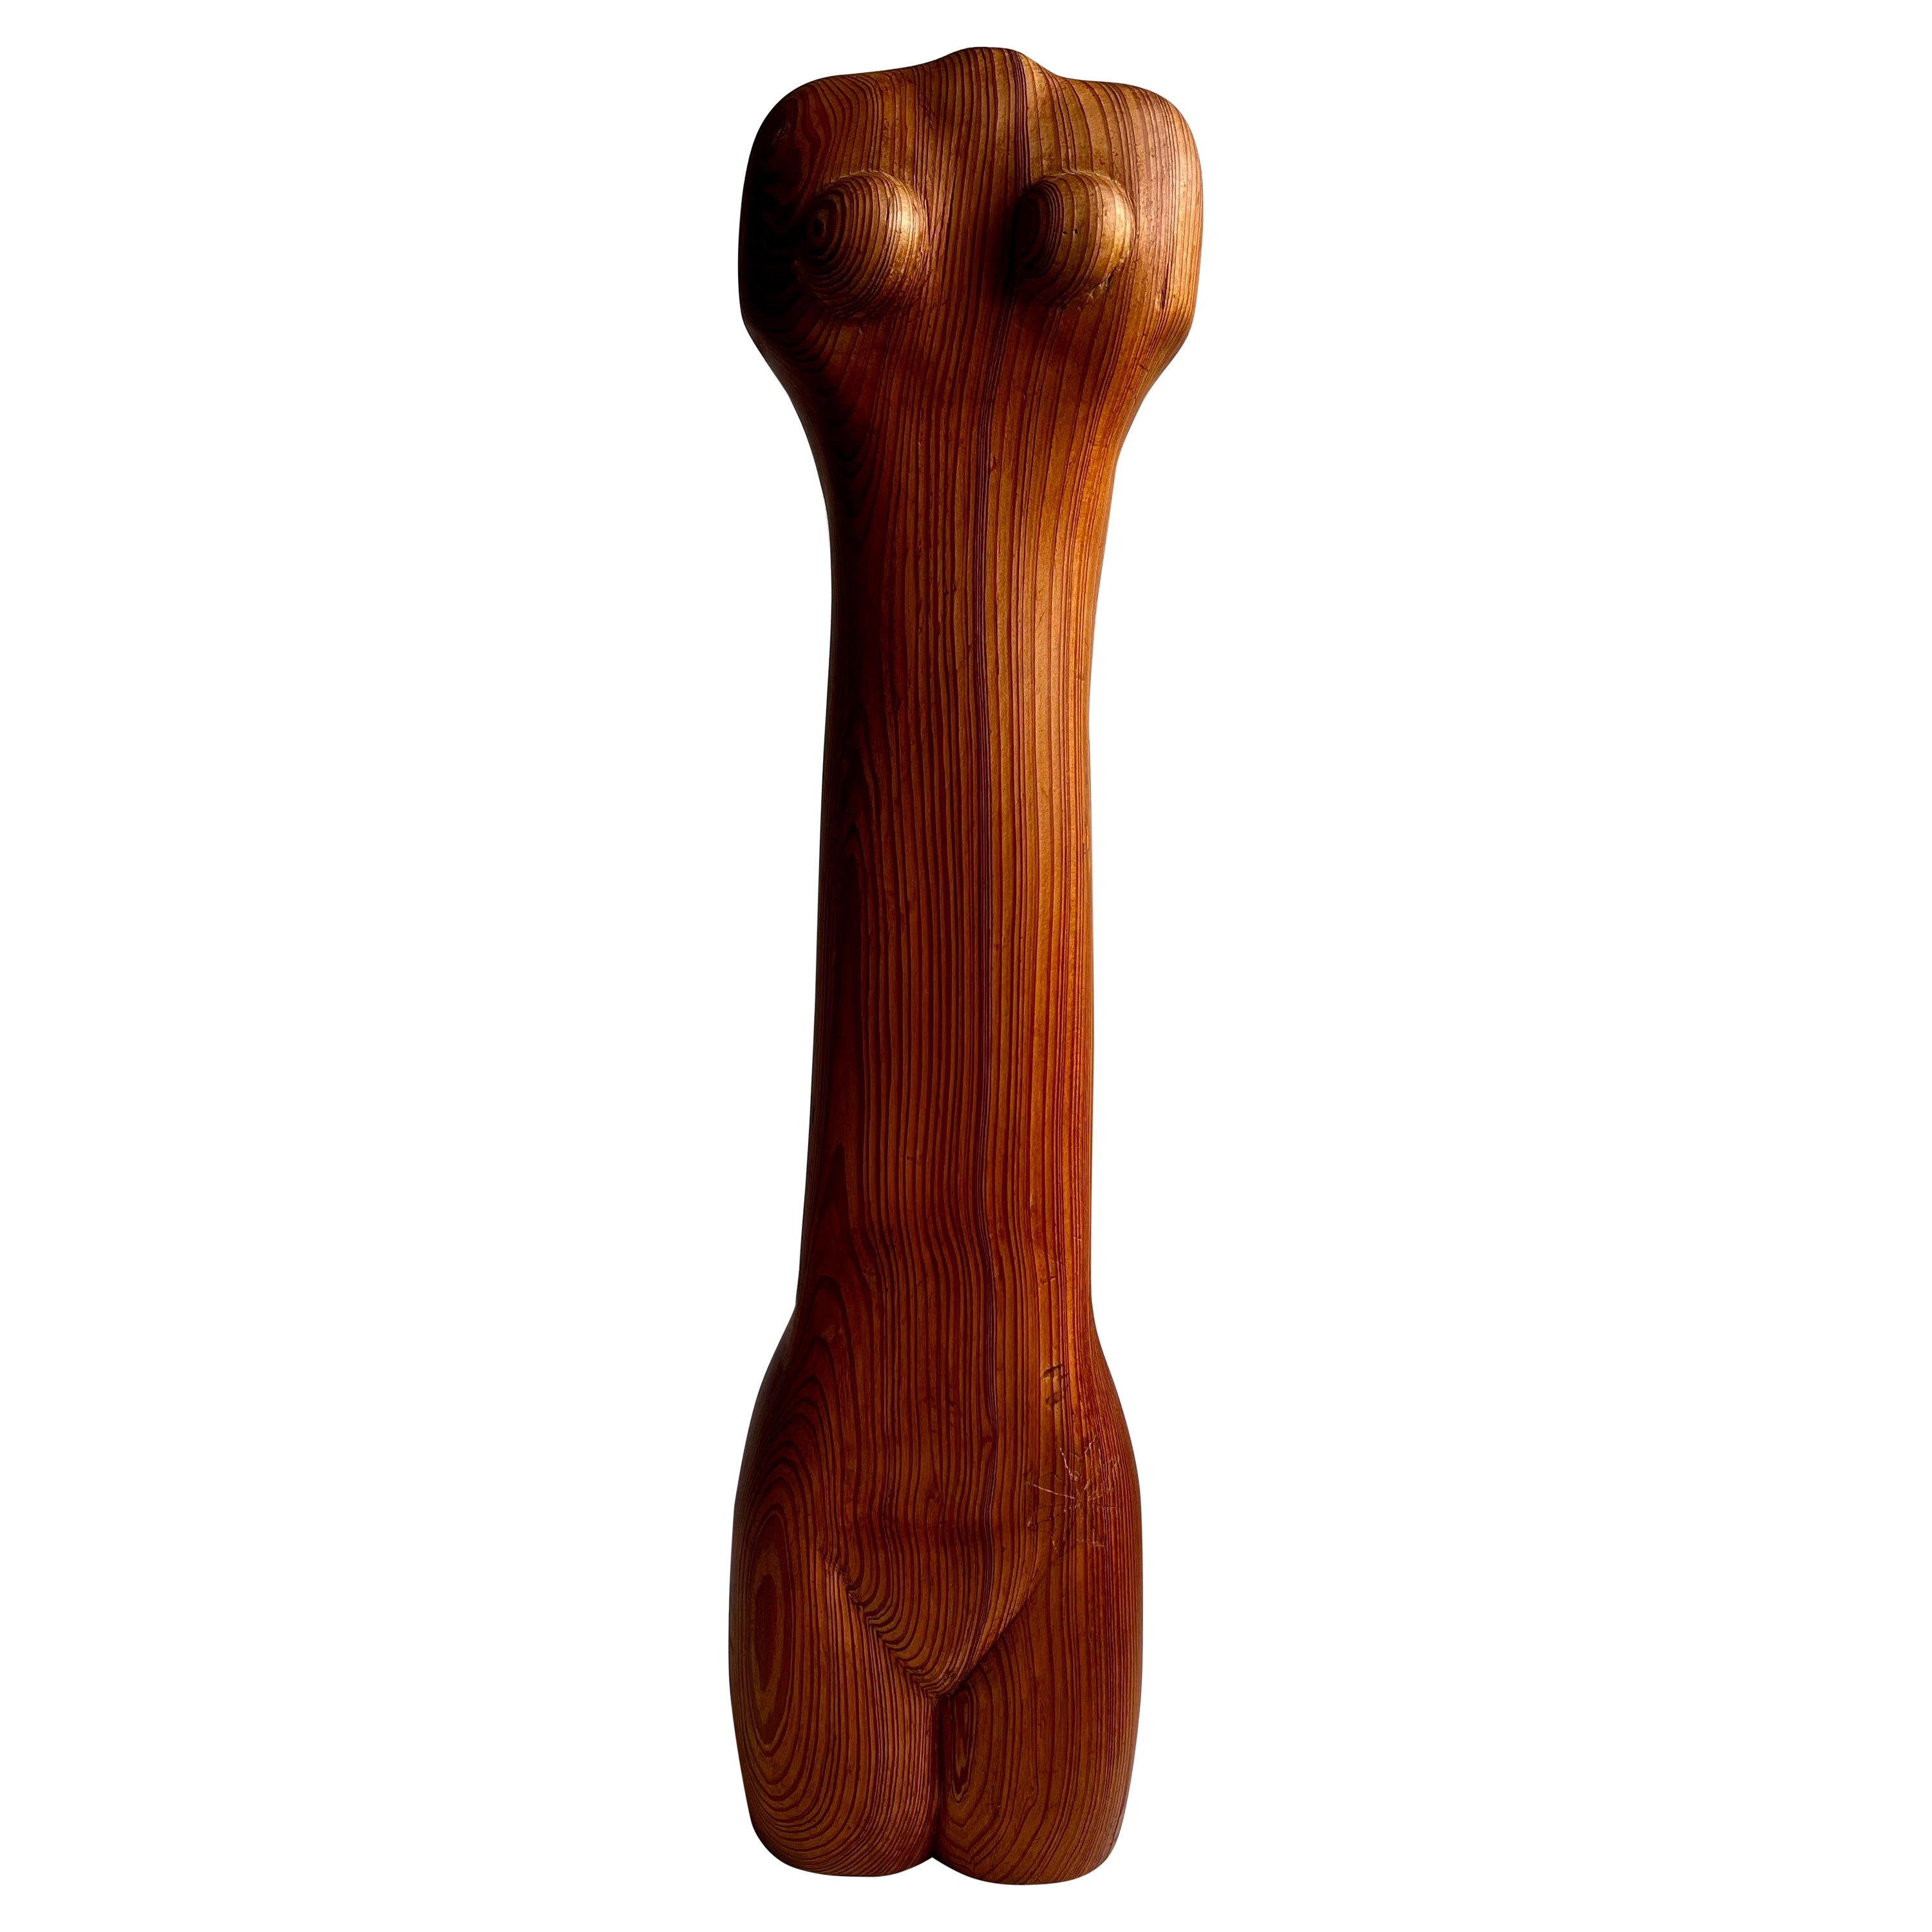 Primitive Modernist Wood Sculpture of Female Nude For Sale